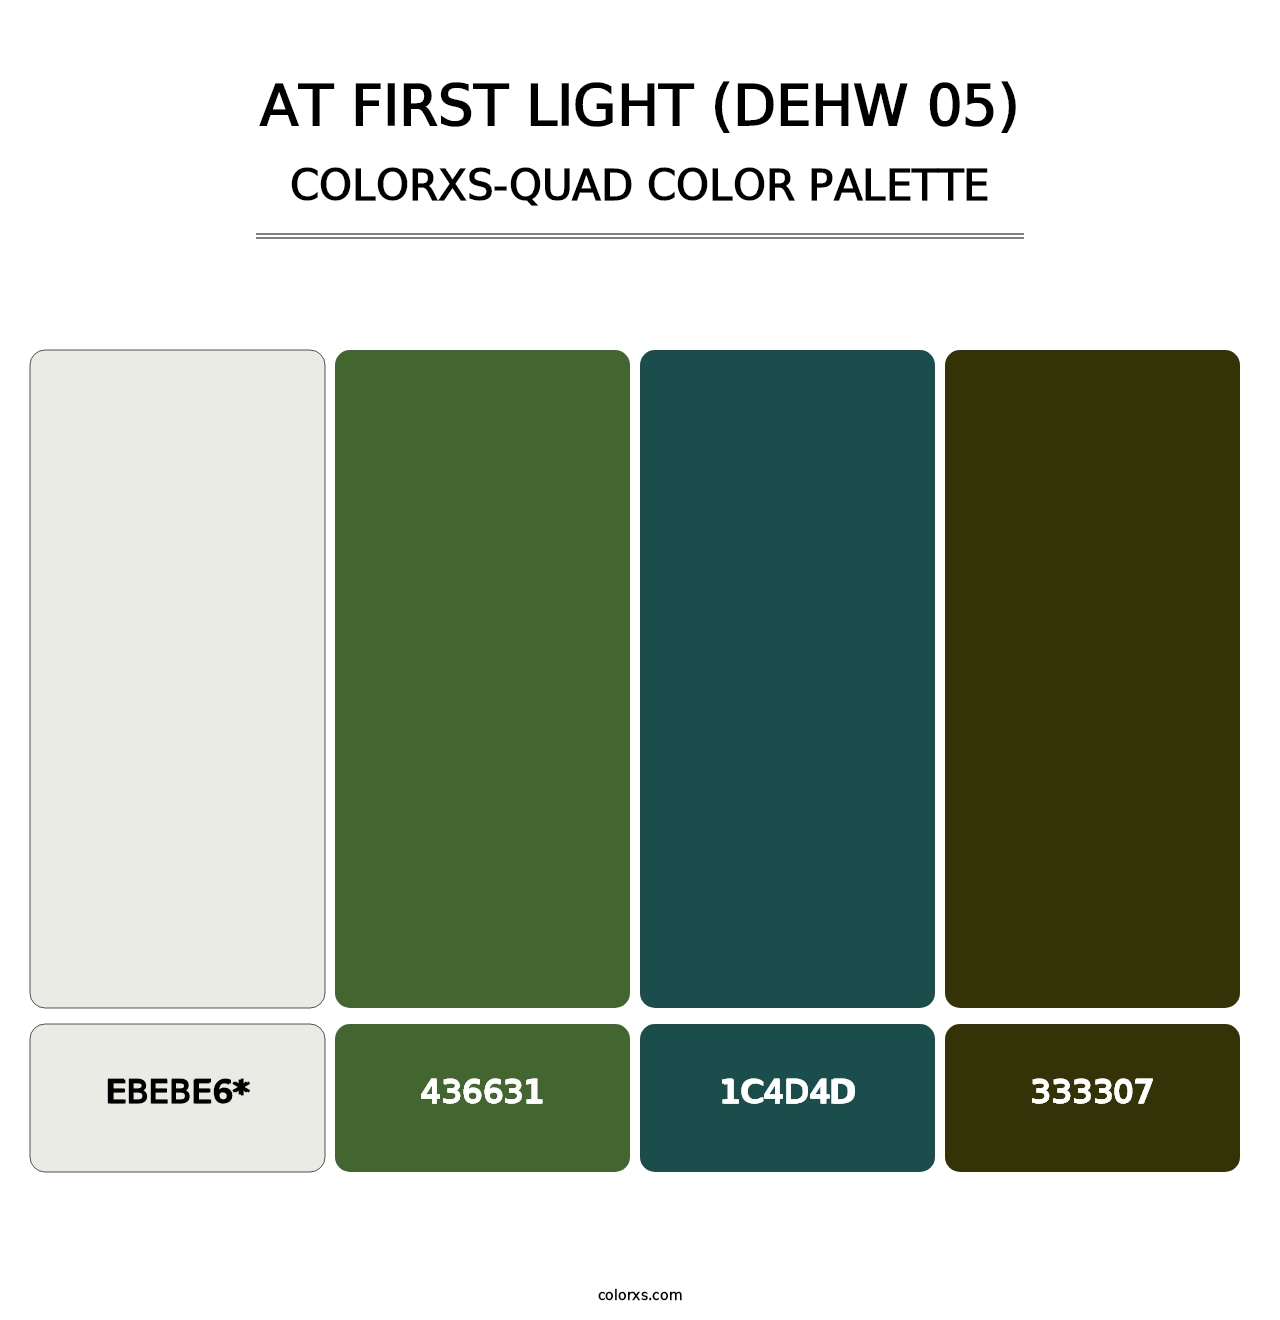 At First Light (DEHW 05) - Colorxs Quad Palette